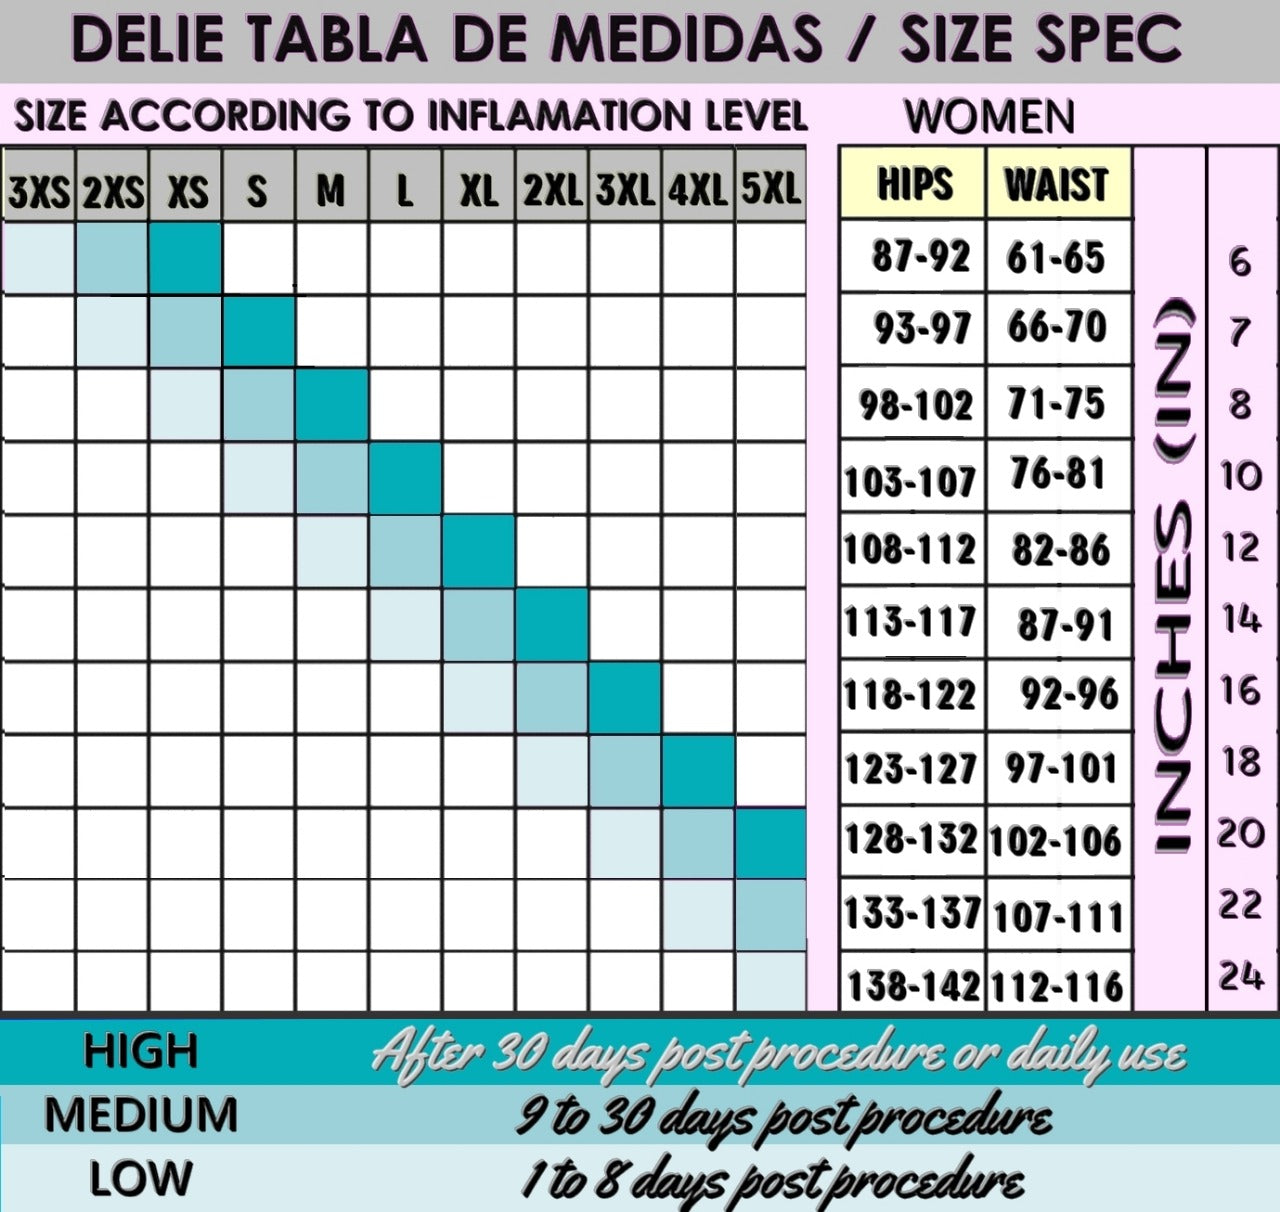 delie-size-chart-tabla